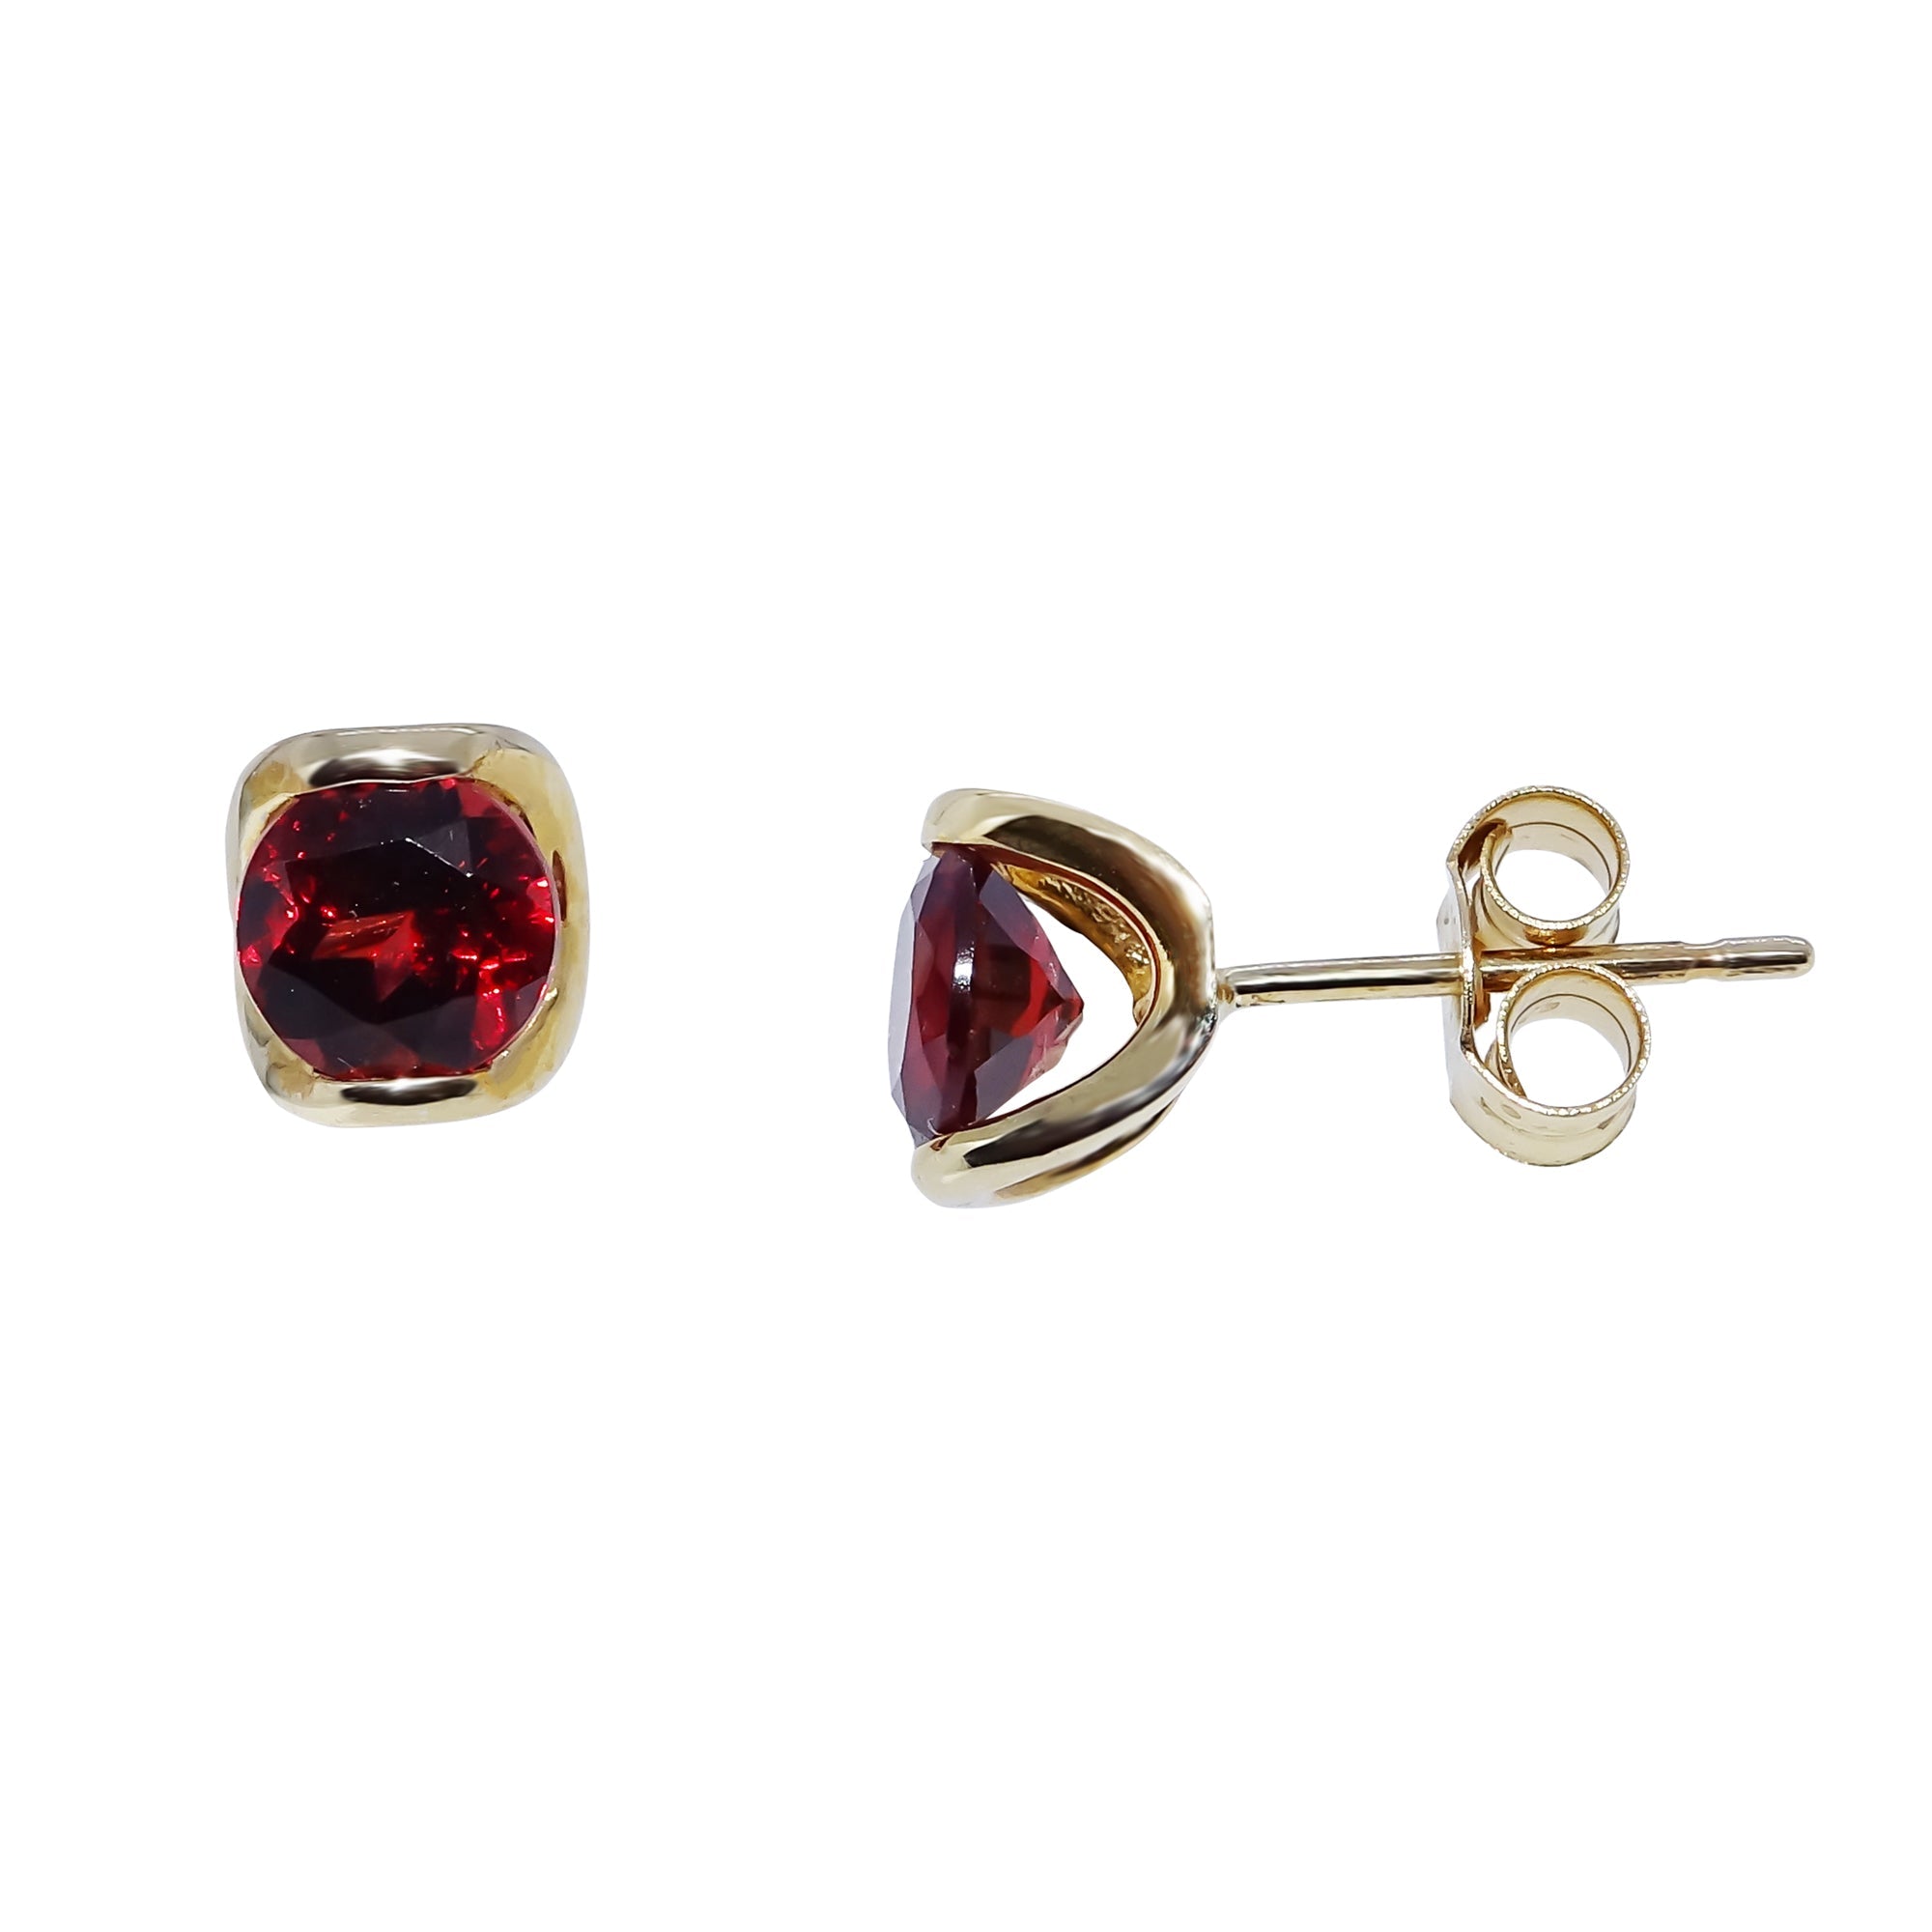 9ct gold 5mm round garnet stud earrings